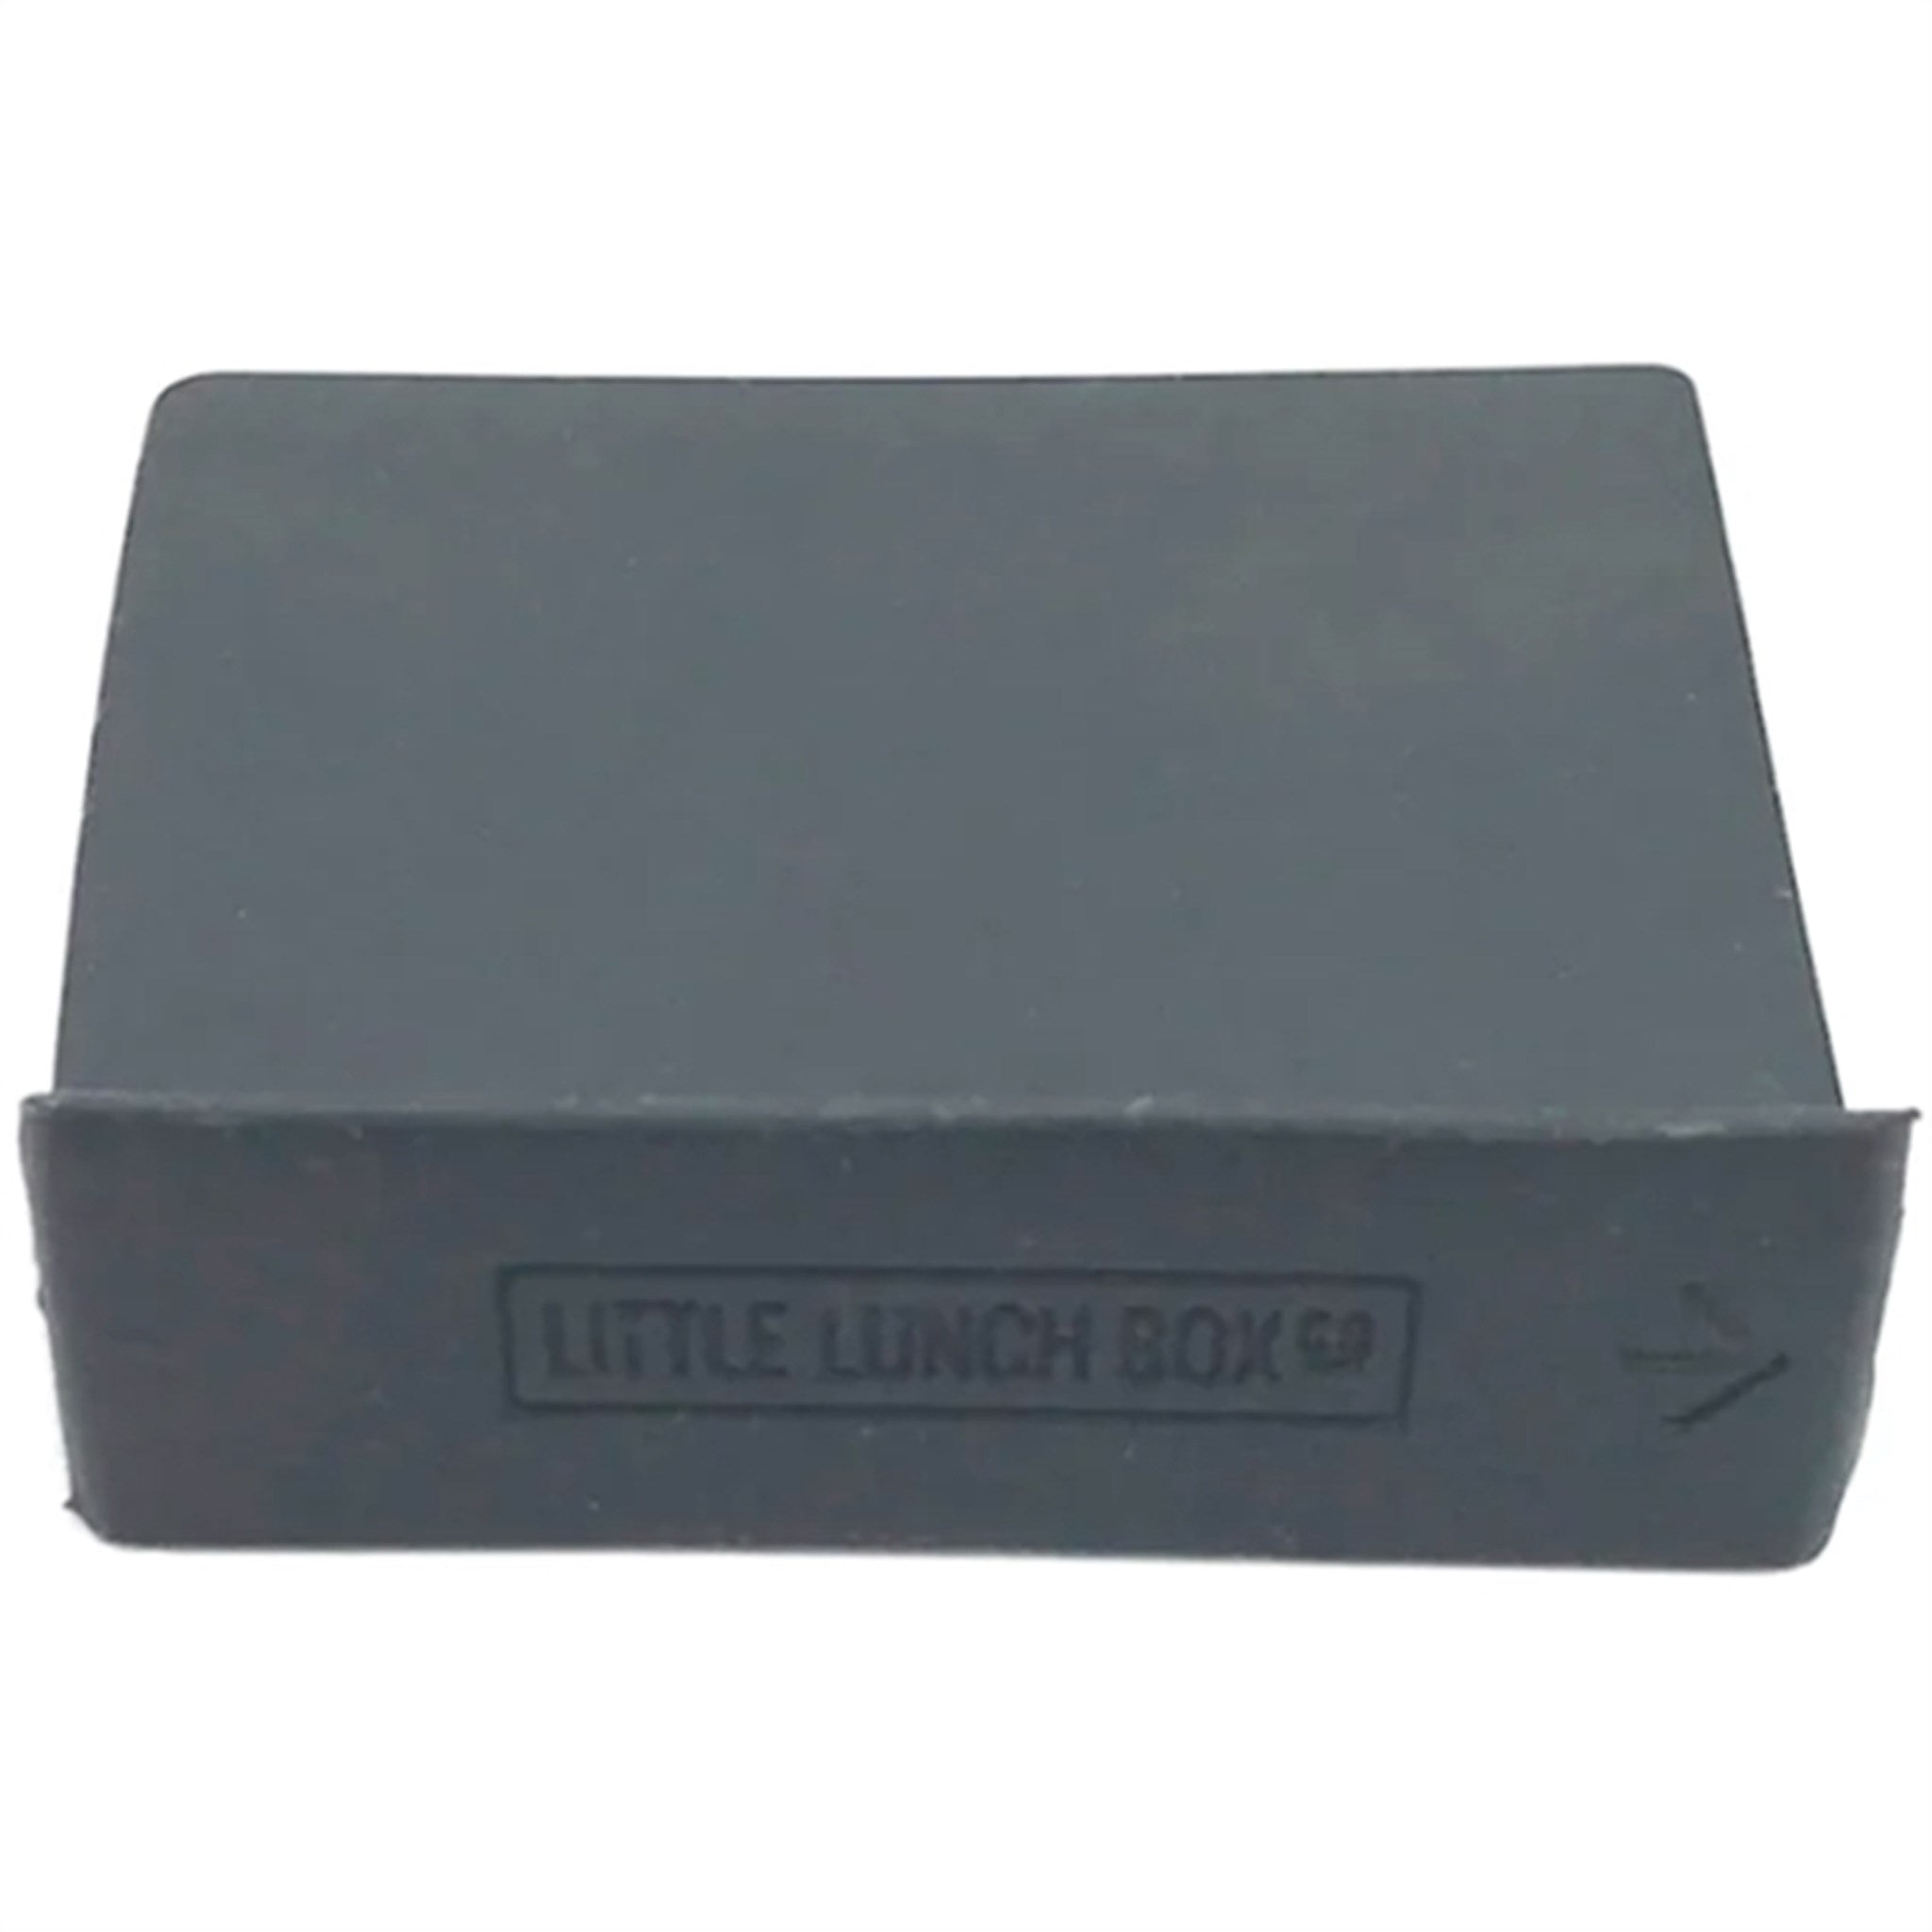 Little Lunch Box Co Bento 2/5 Rumdelere Dark Grey Construction